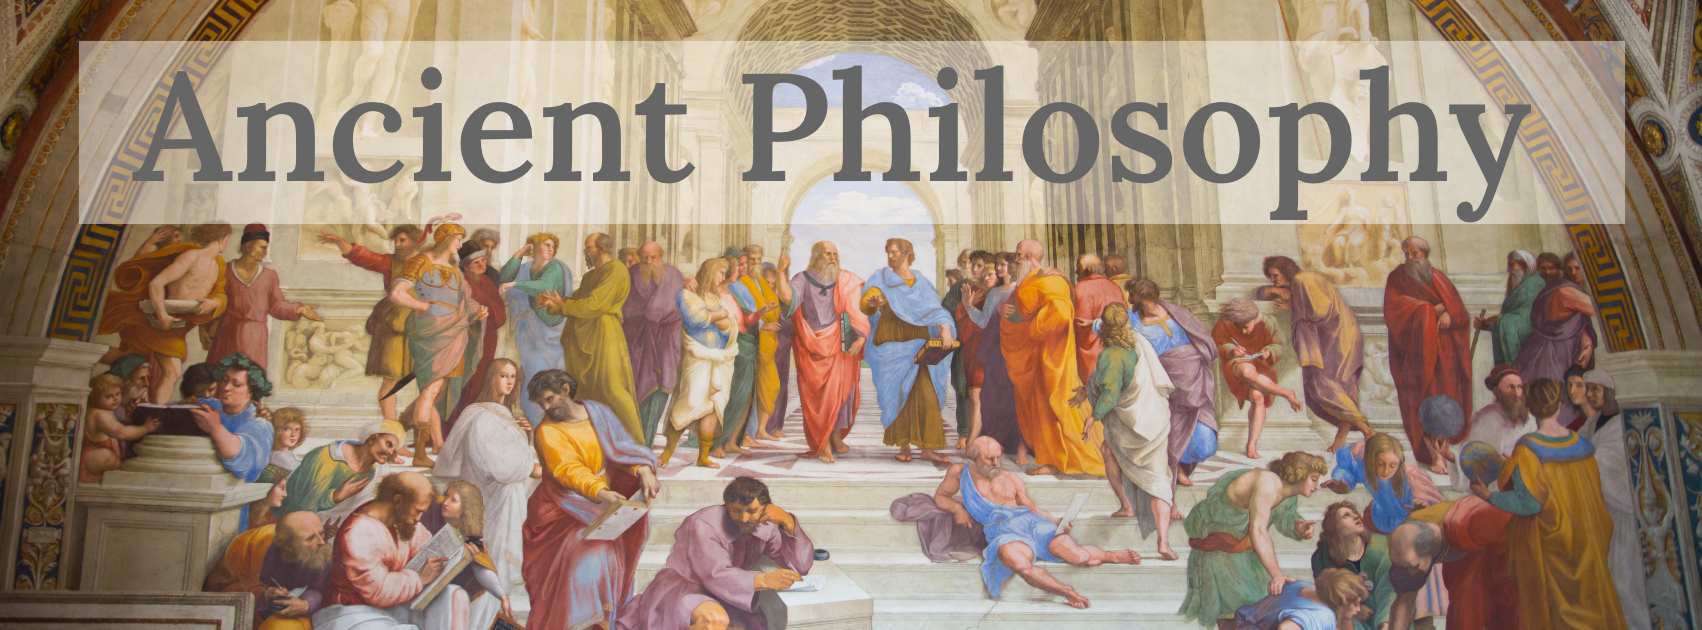 ancient philosophy banner